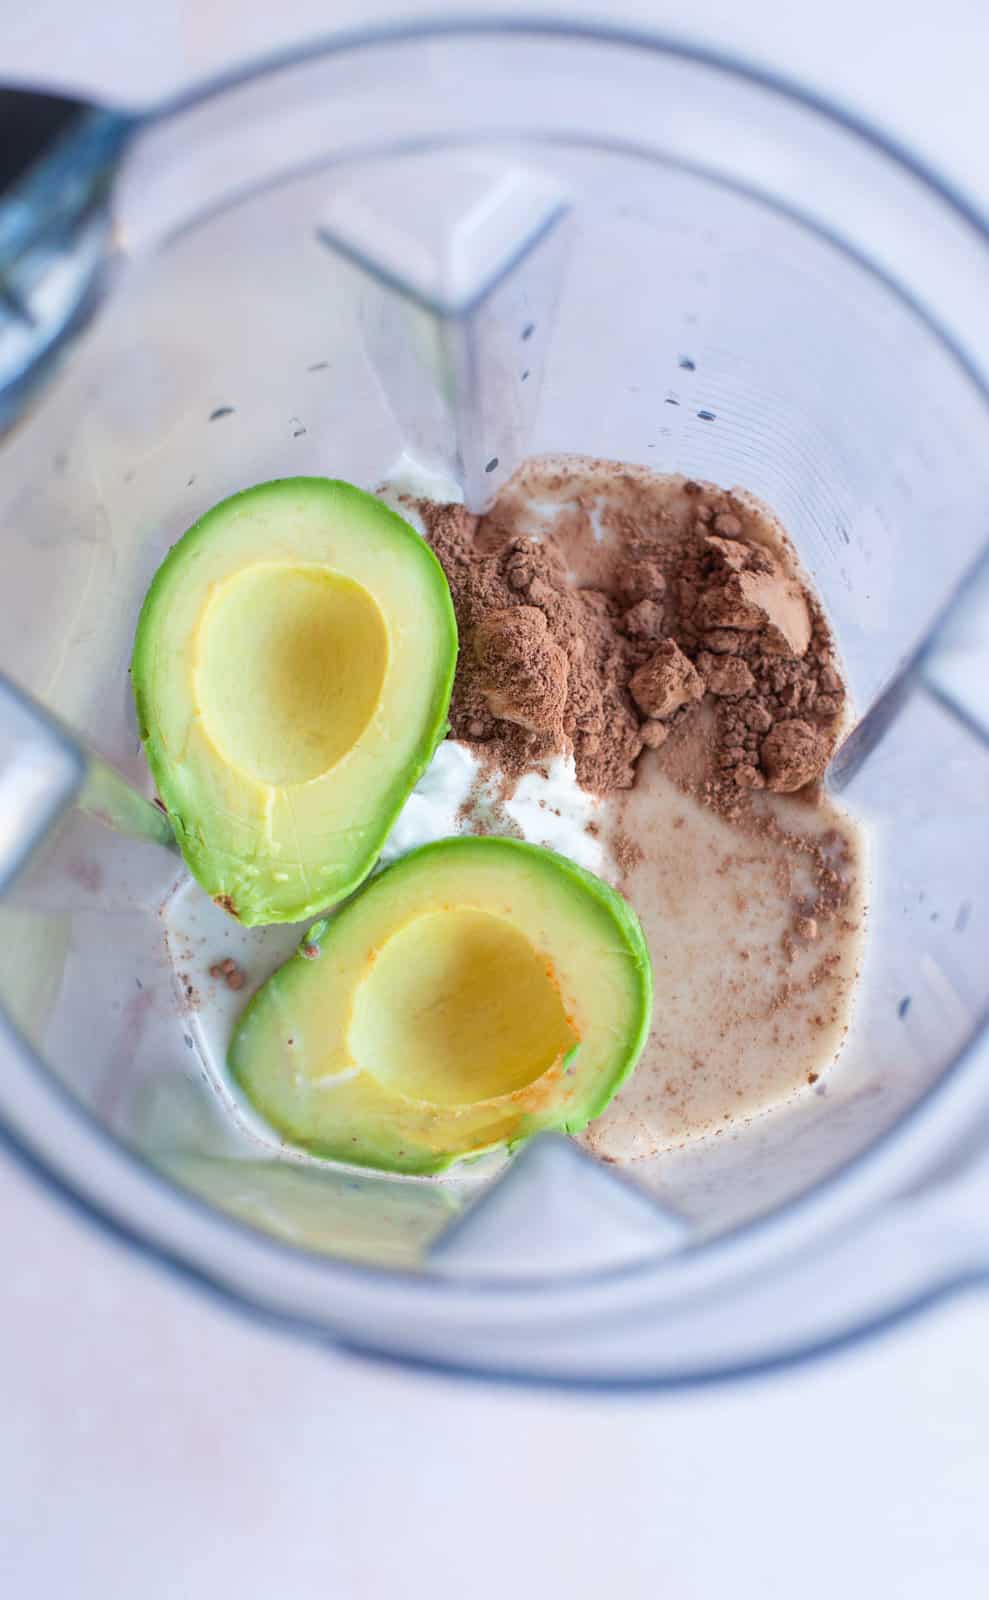 avocado, cocoa powder, milk and yogurt in a blender.